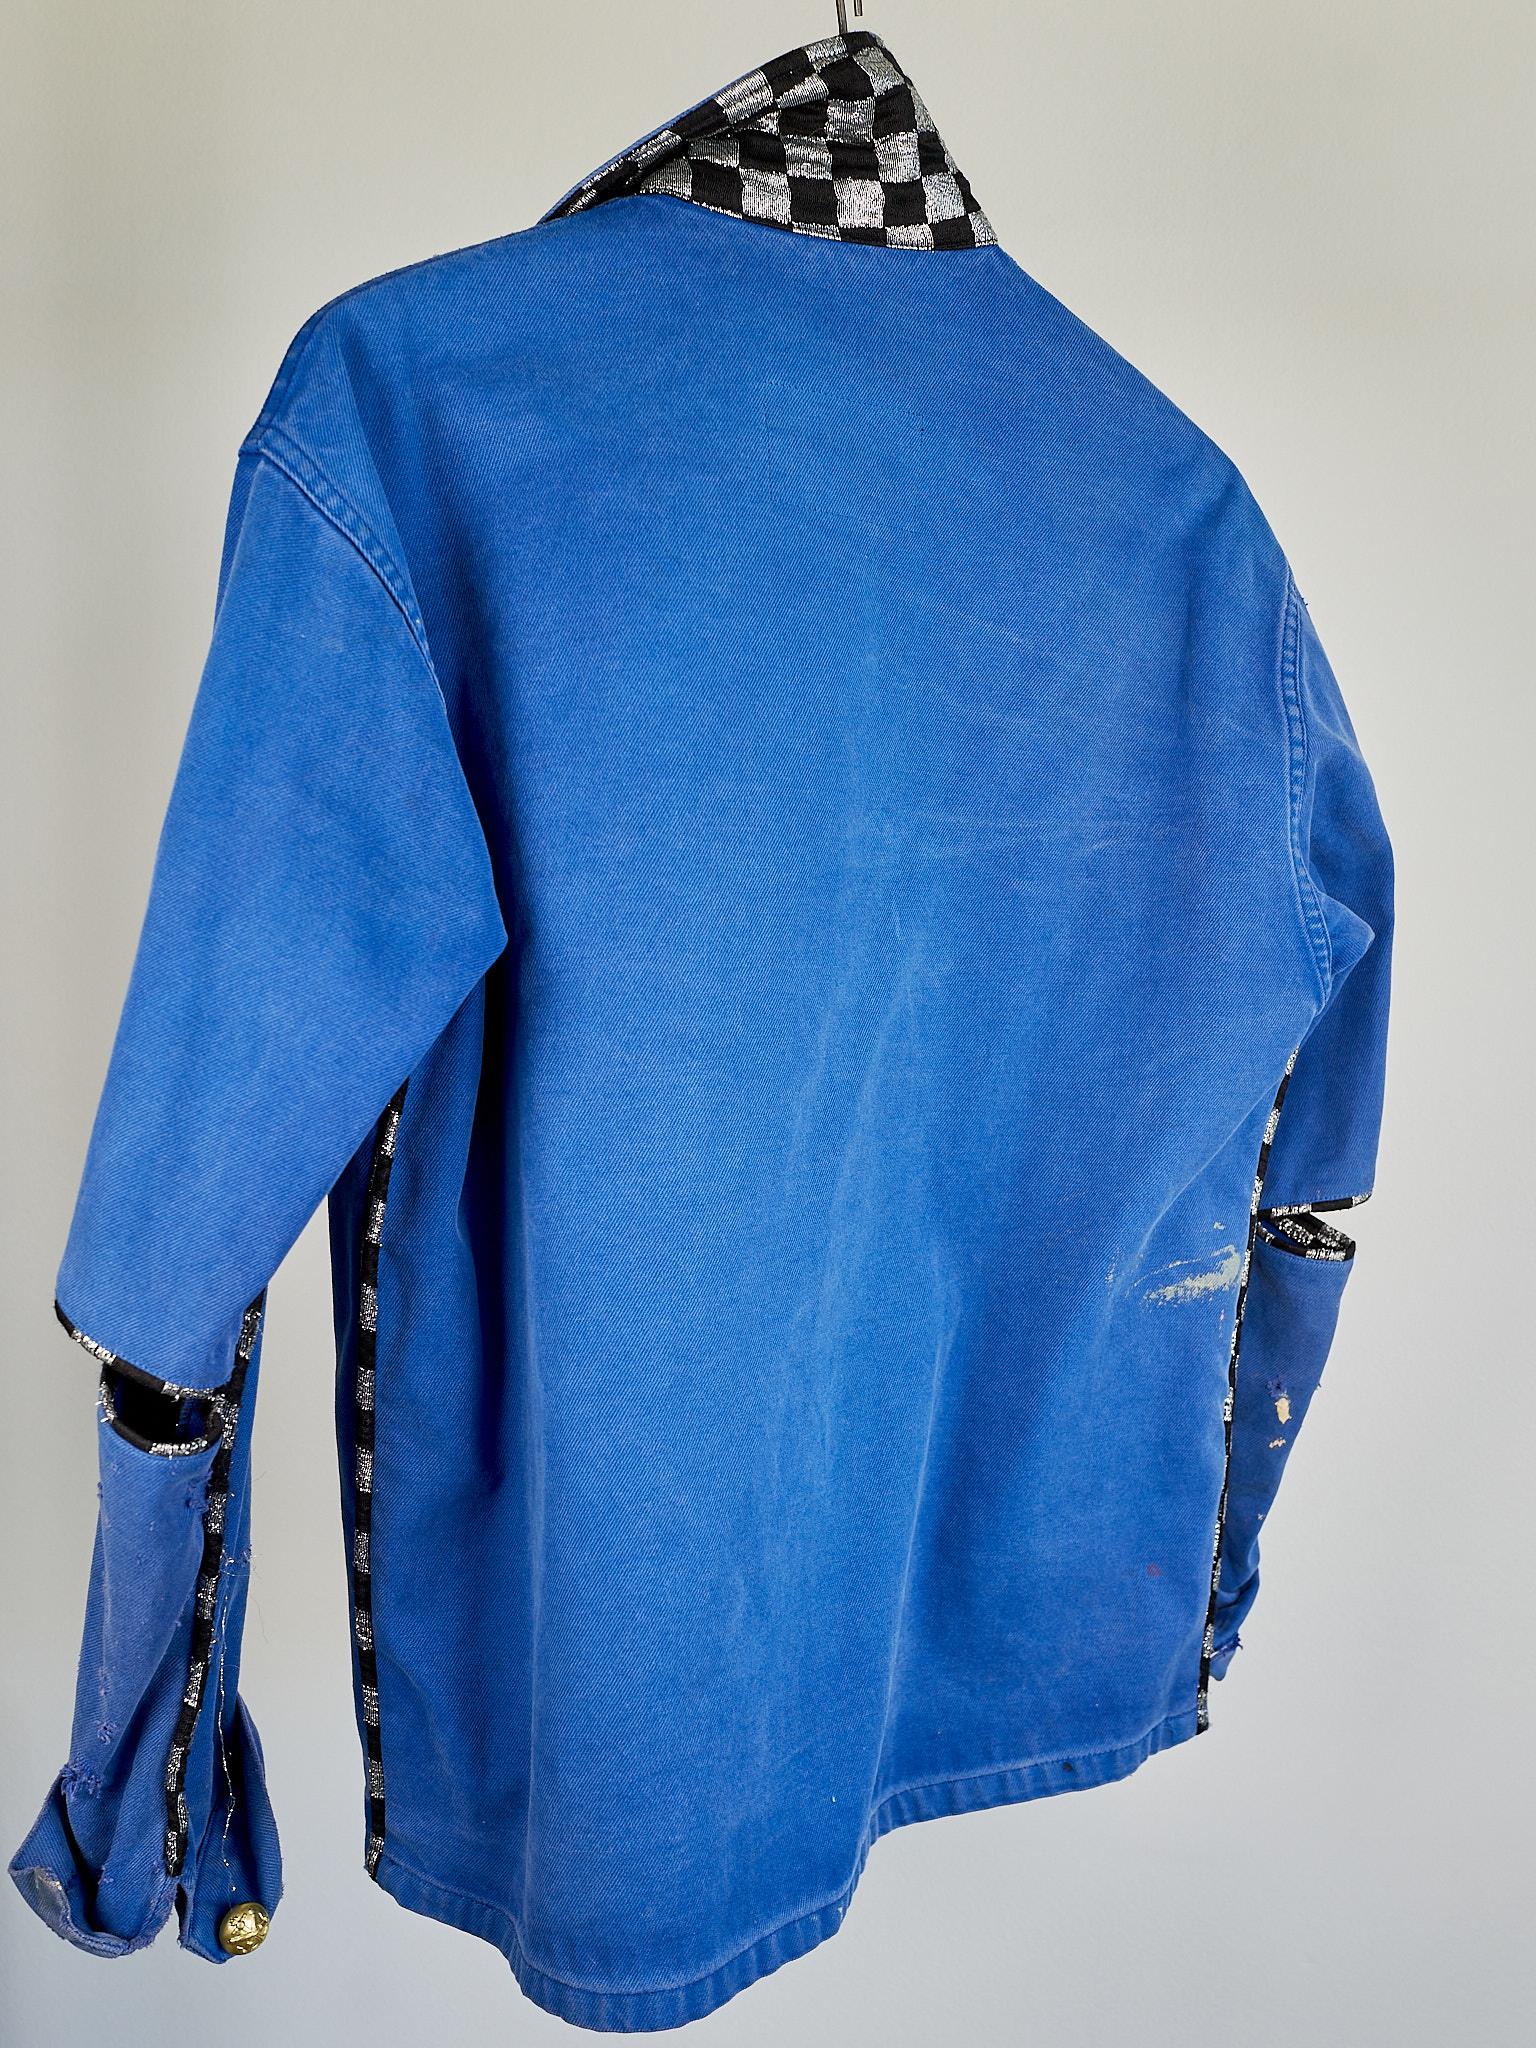 Crystal Embellished Distressed Cobalt Blue Jacket Black Silver Lurex Tweed 6